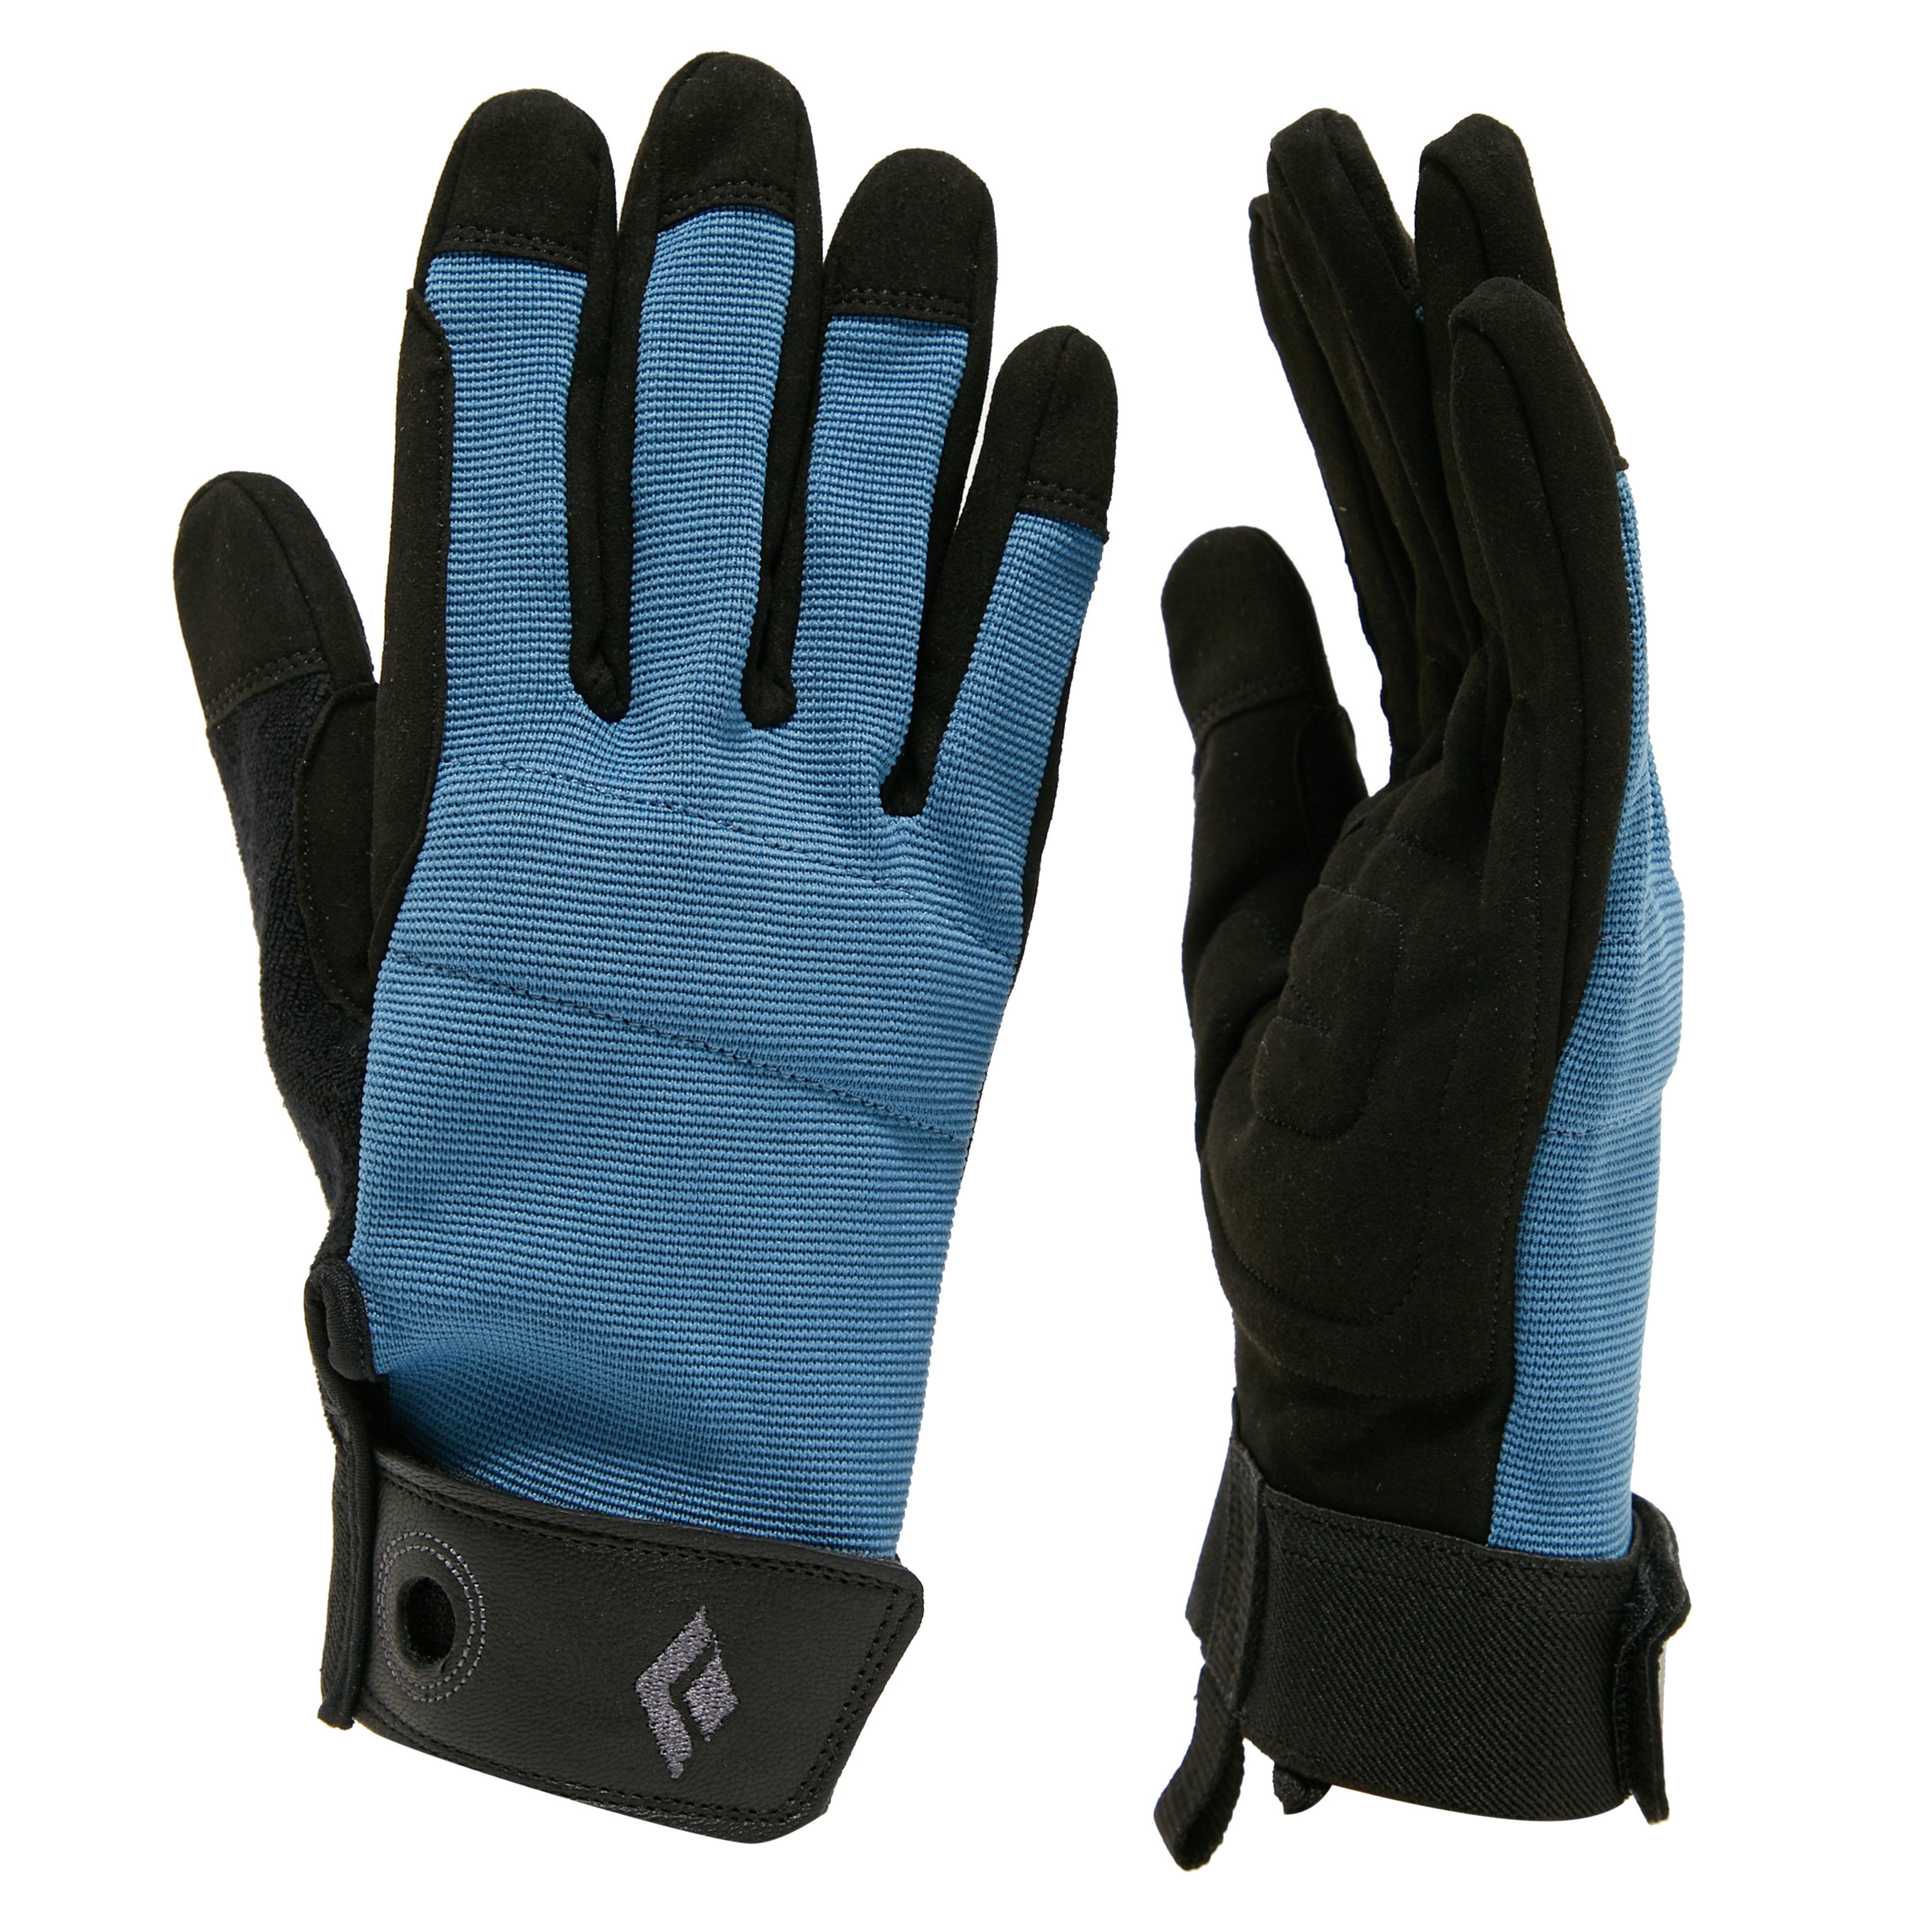 Black Diamond Crag Gloves Review